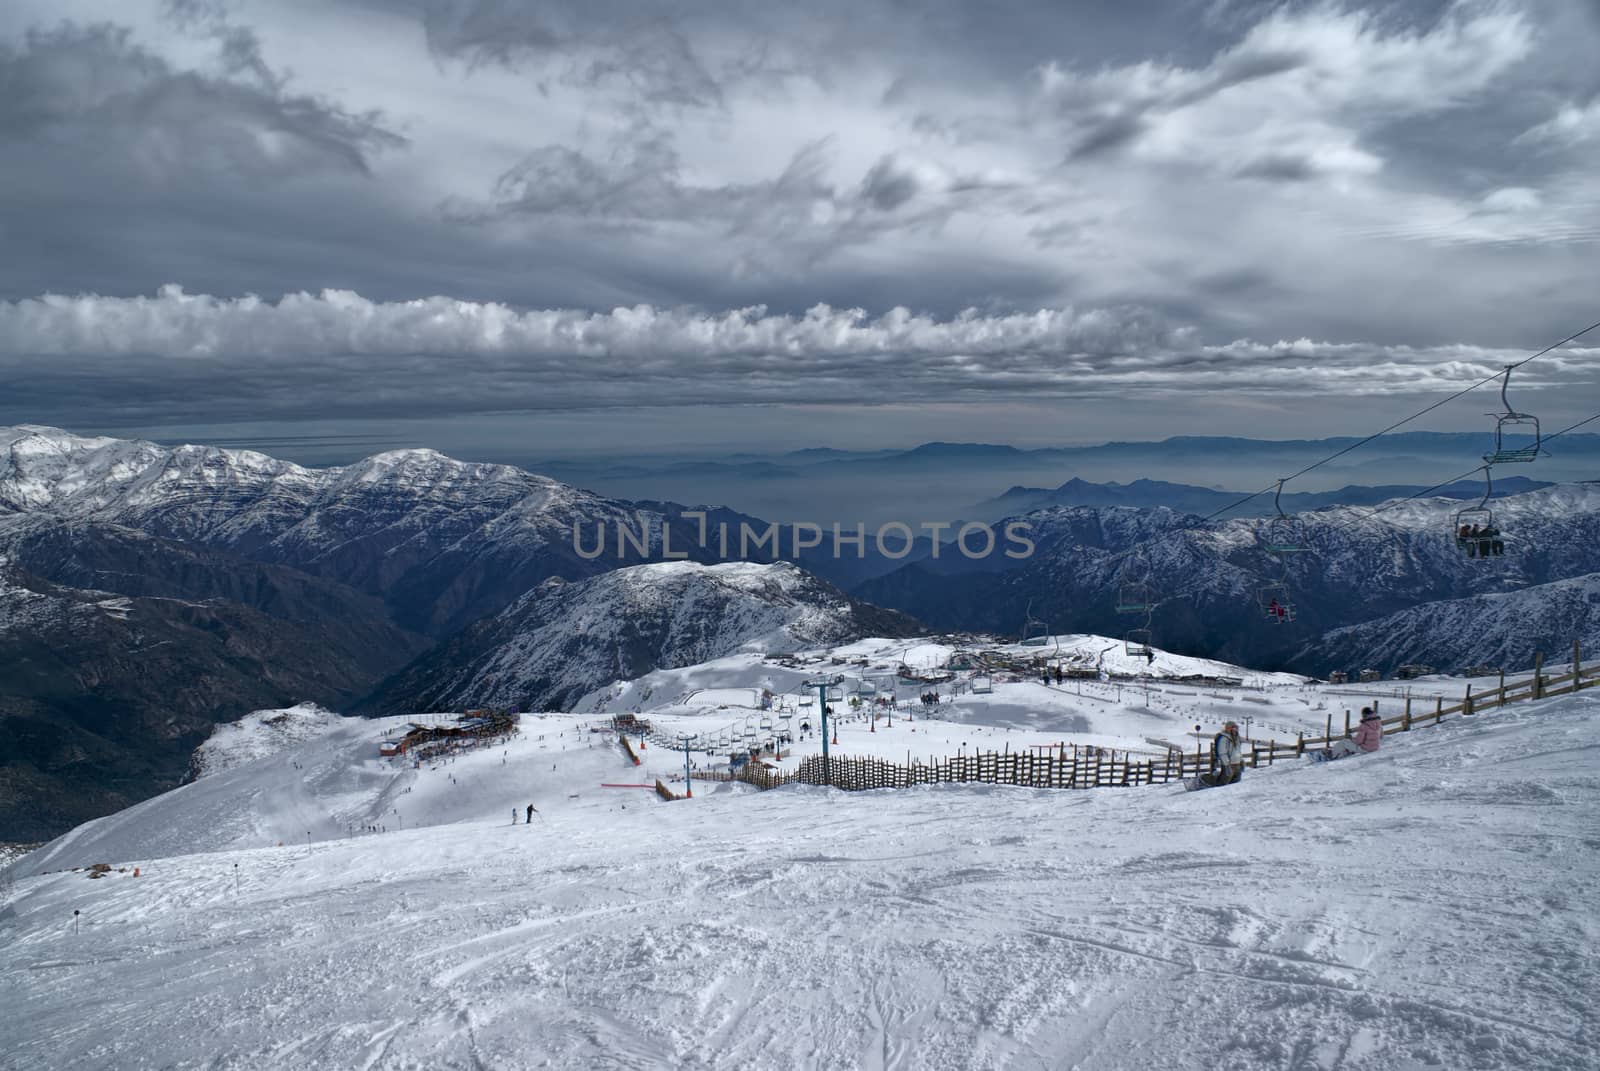 Picturesque view of piste in Valle Nevado under gloomy grey sky